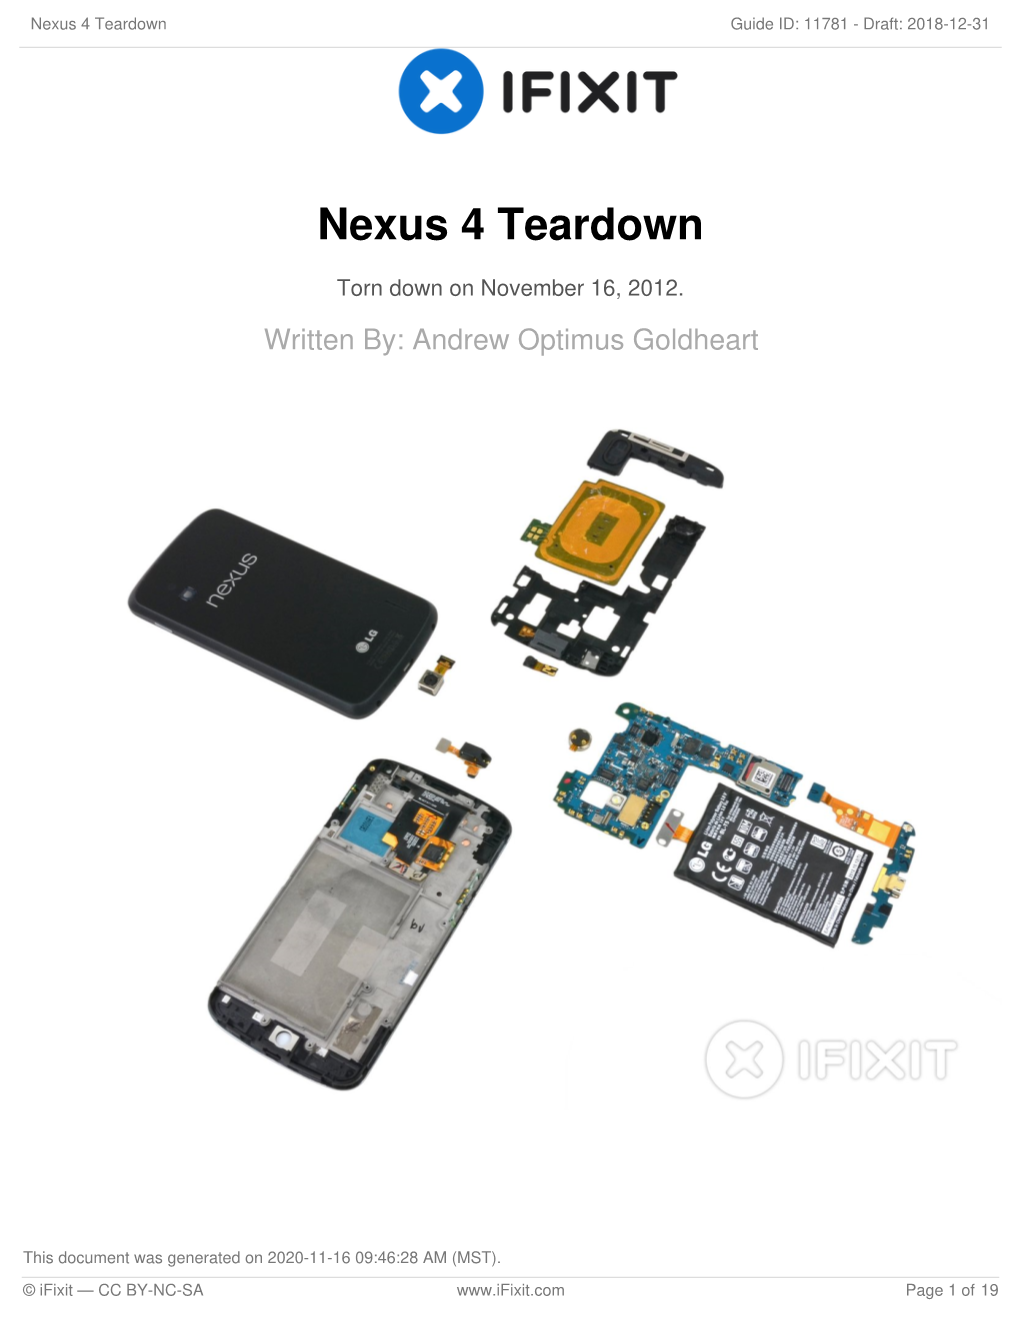 Nexus 4 Teardown Guide ID: 11781 - Draft: 2018-12-31